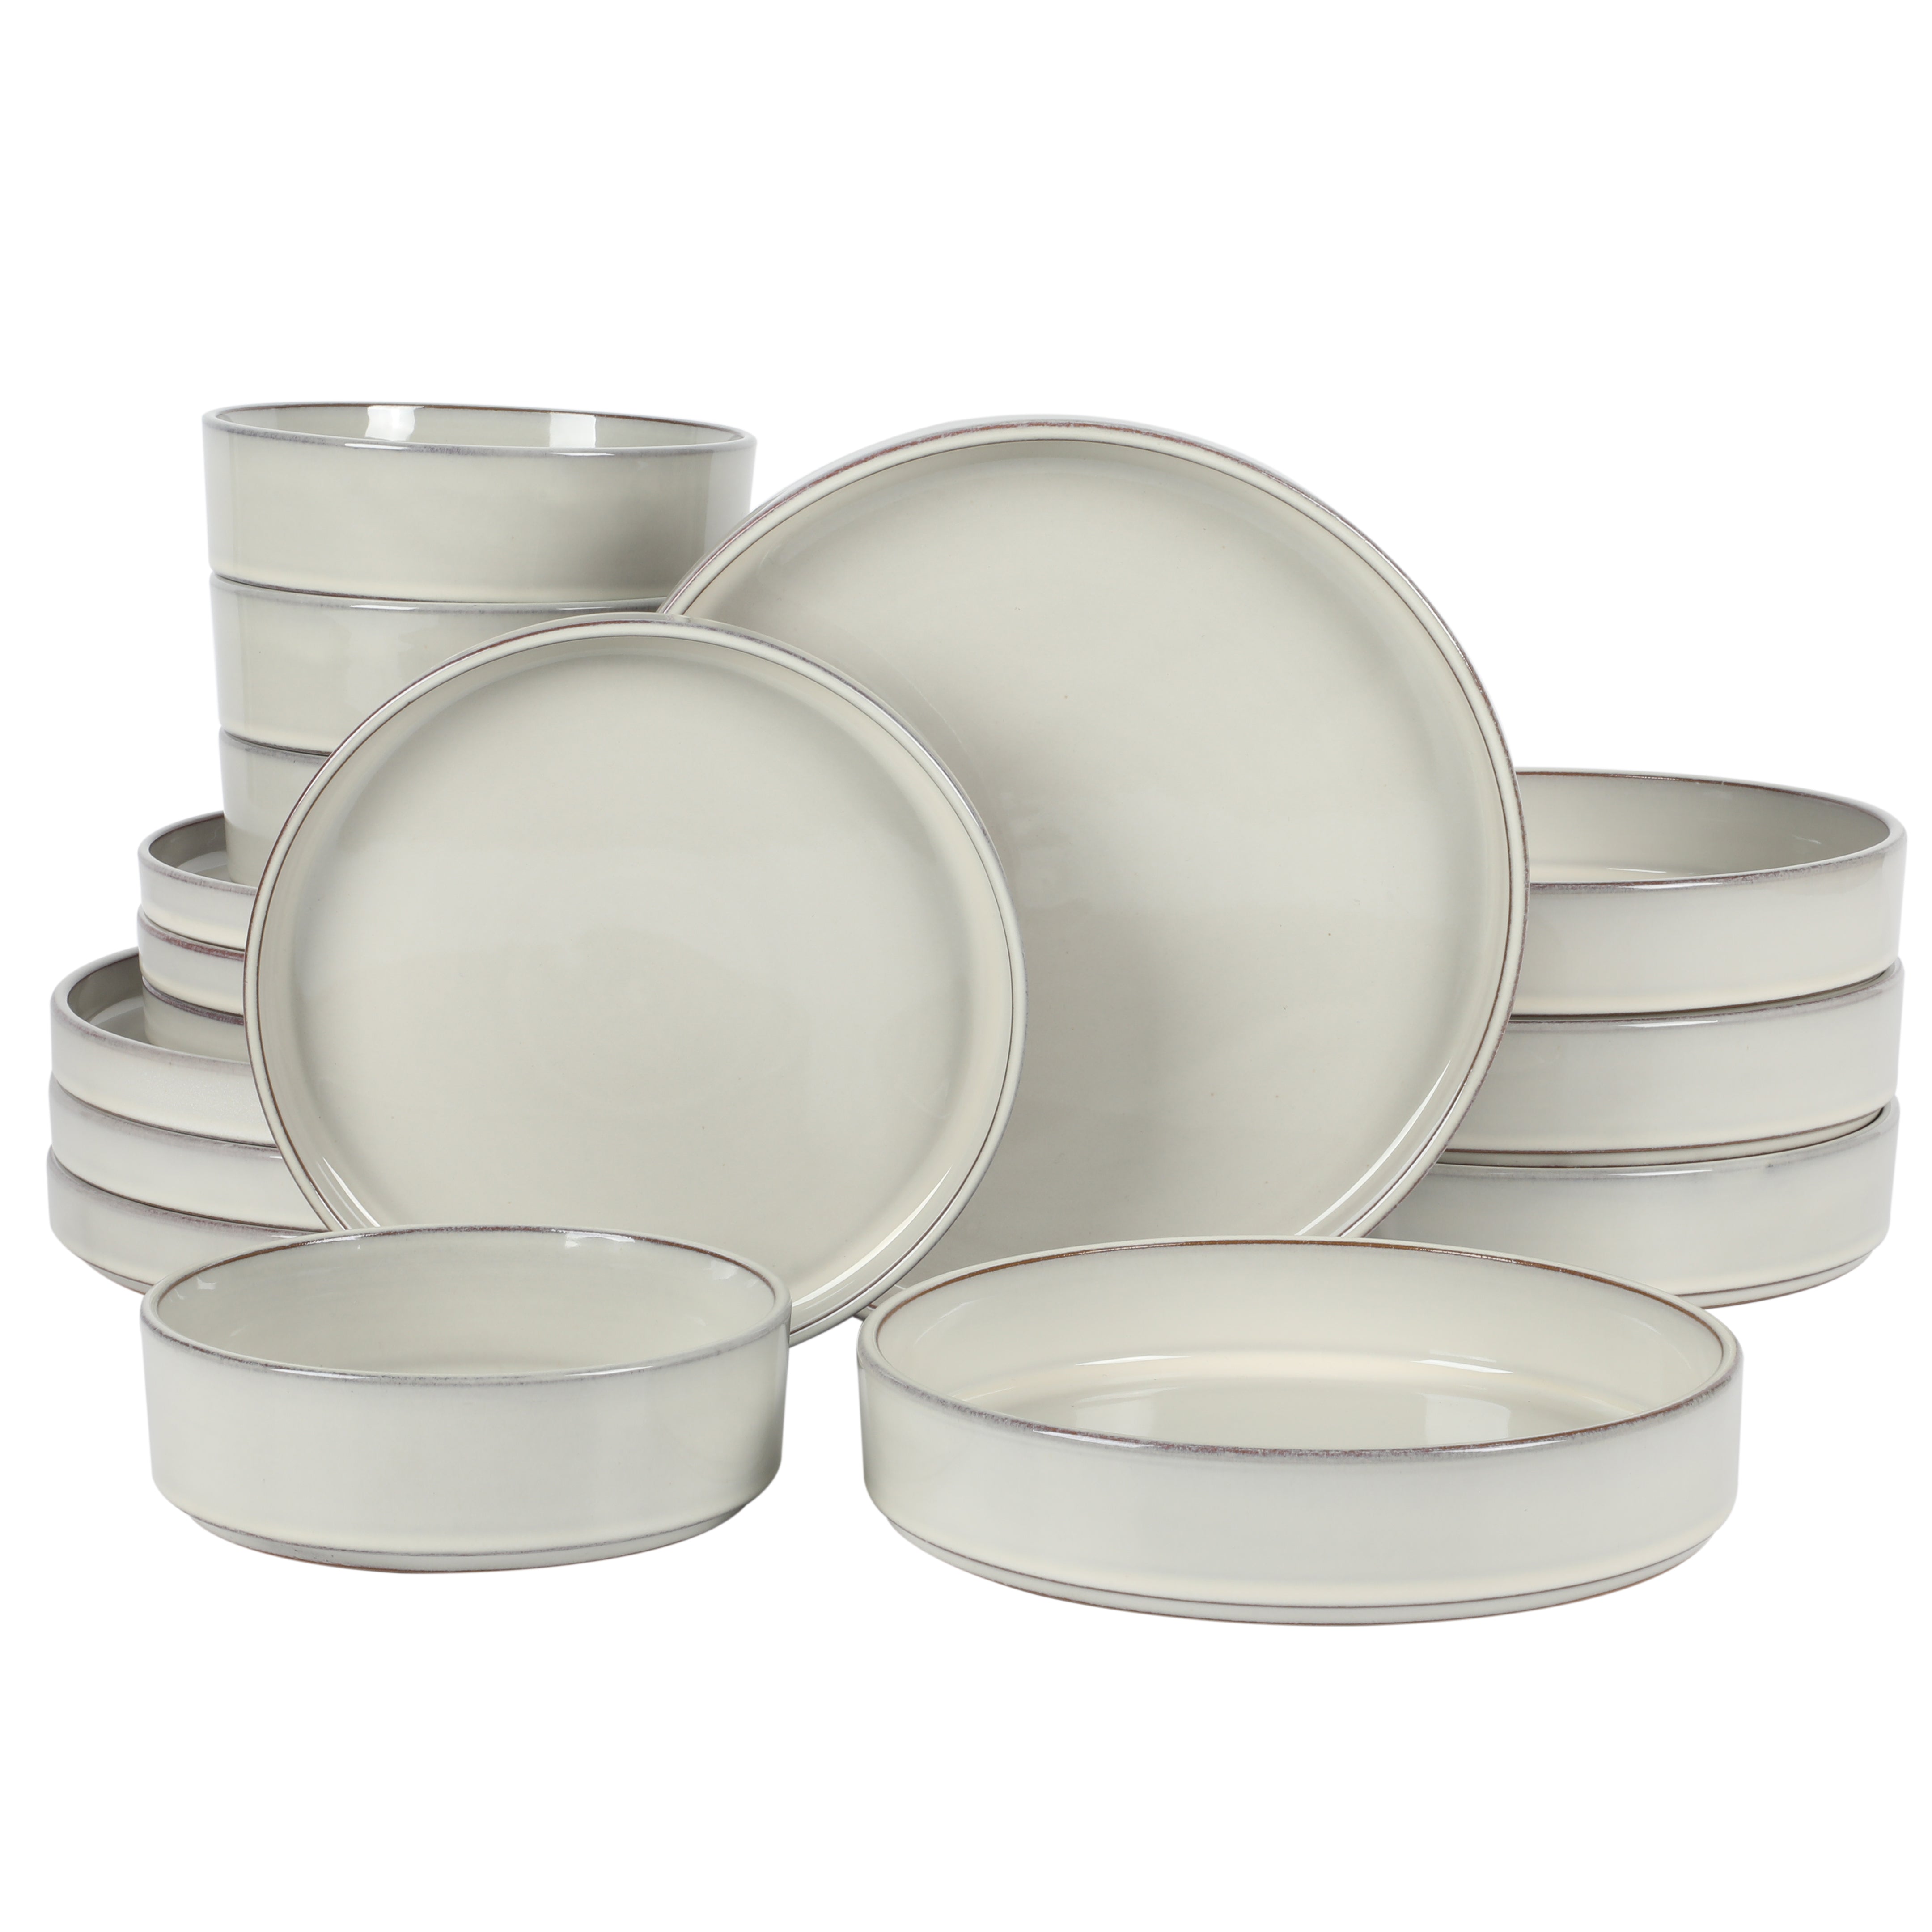 Bloomhouse Santorini Mist 16 Piece Double Bowl Terracotta Reactive Glaze Plates and Bowls Dinnerware Set - Moonstone White